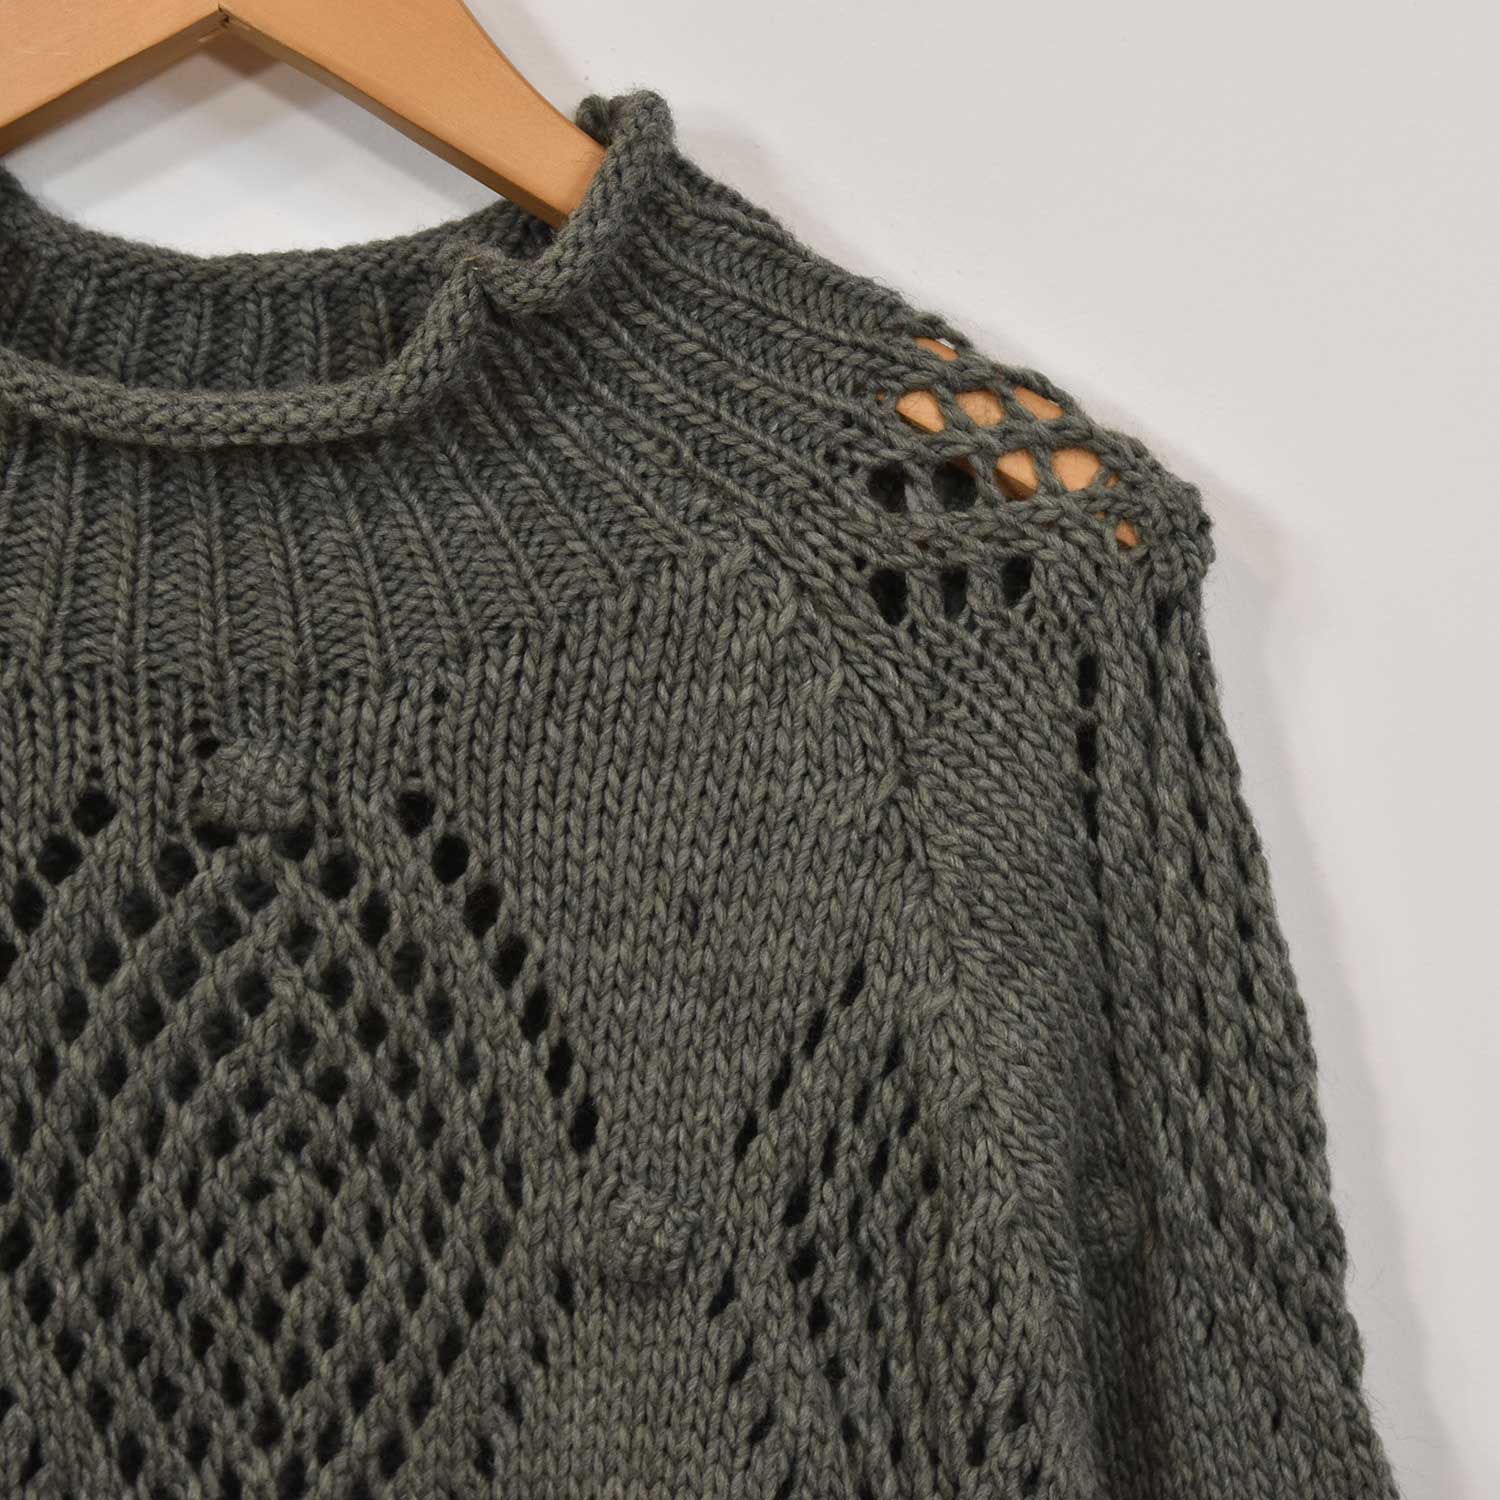 Kaki structured knit sweater